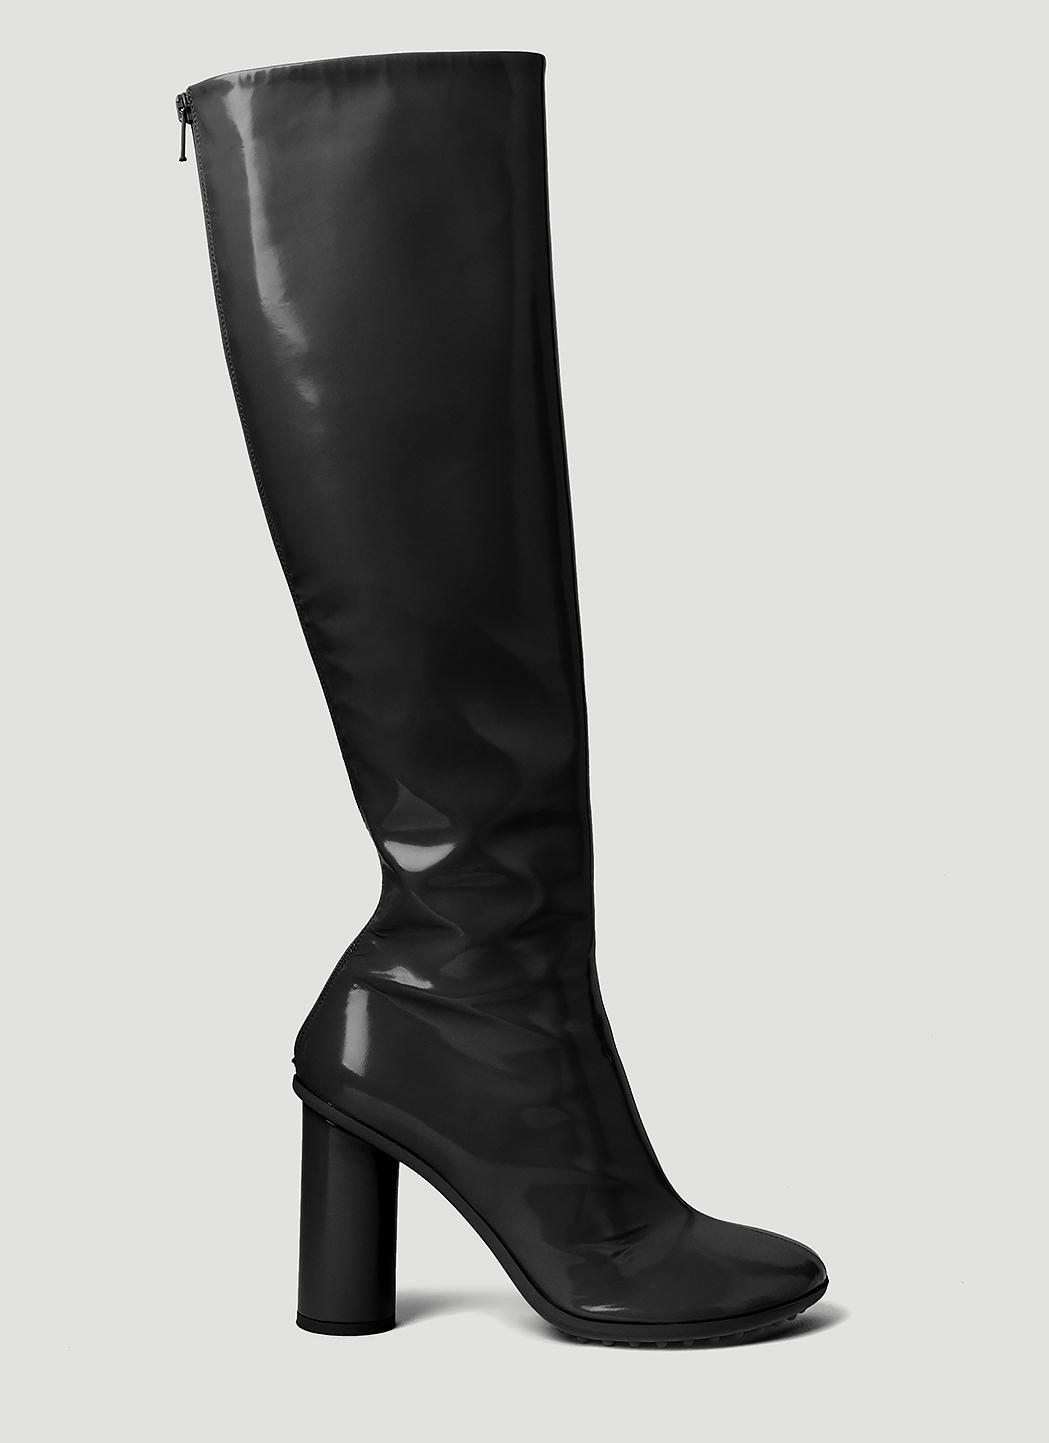 Bottega Veneta Atomic Knee-high Boots in Black | Lyst